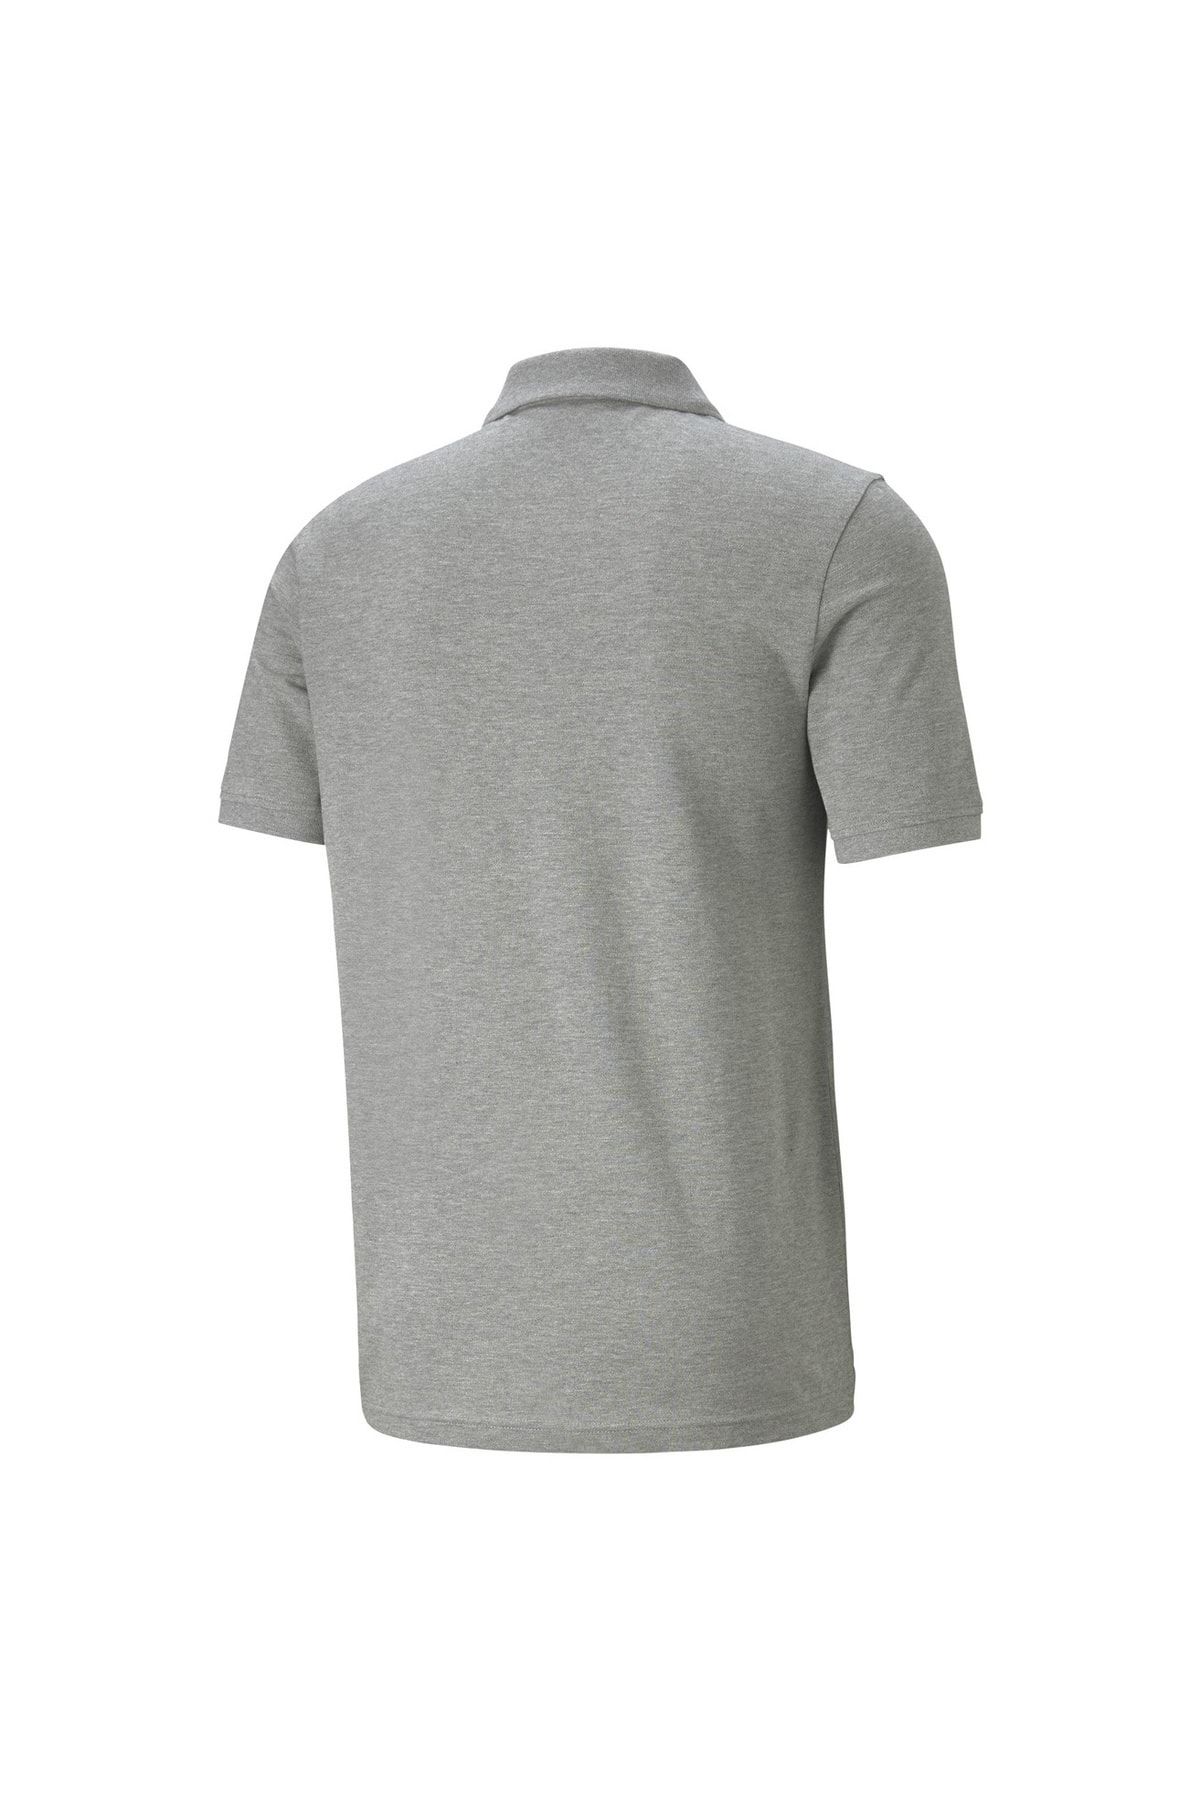 Puma Round Neck Plain Gray Men\'s T-Shirt 58667403 ESS Pique Polo Medium G -  Trendyol